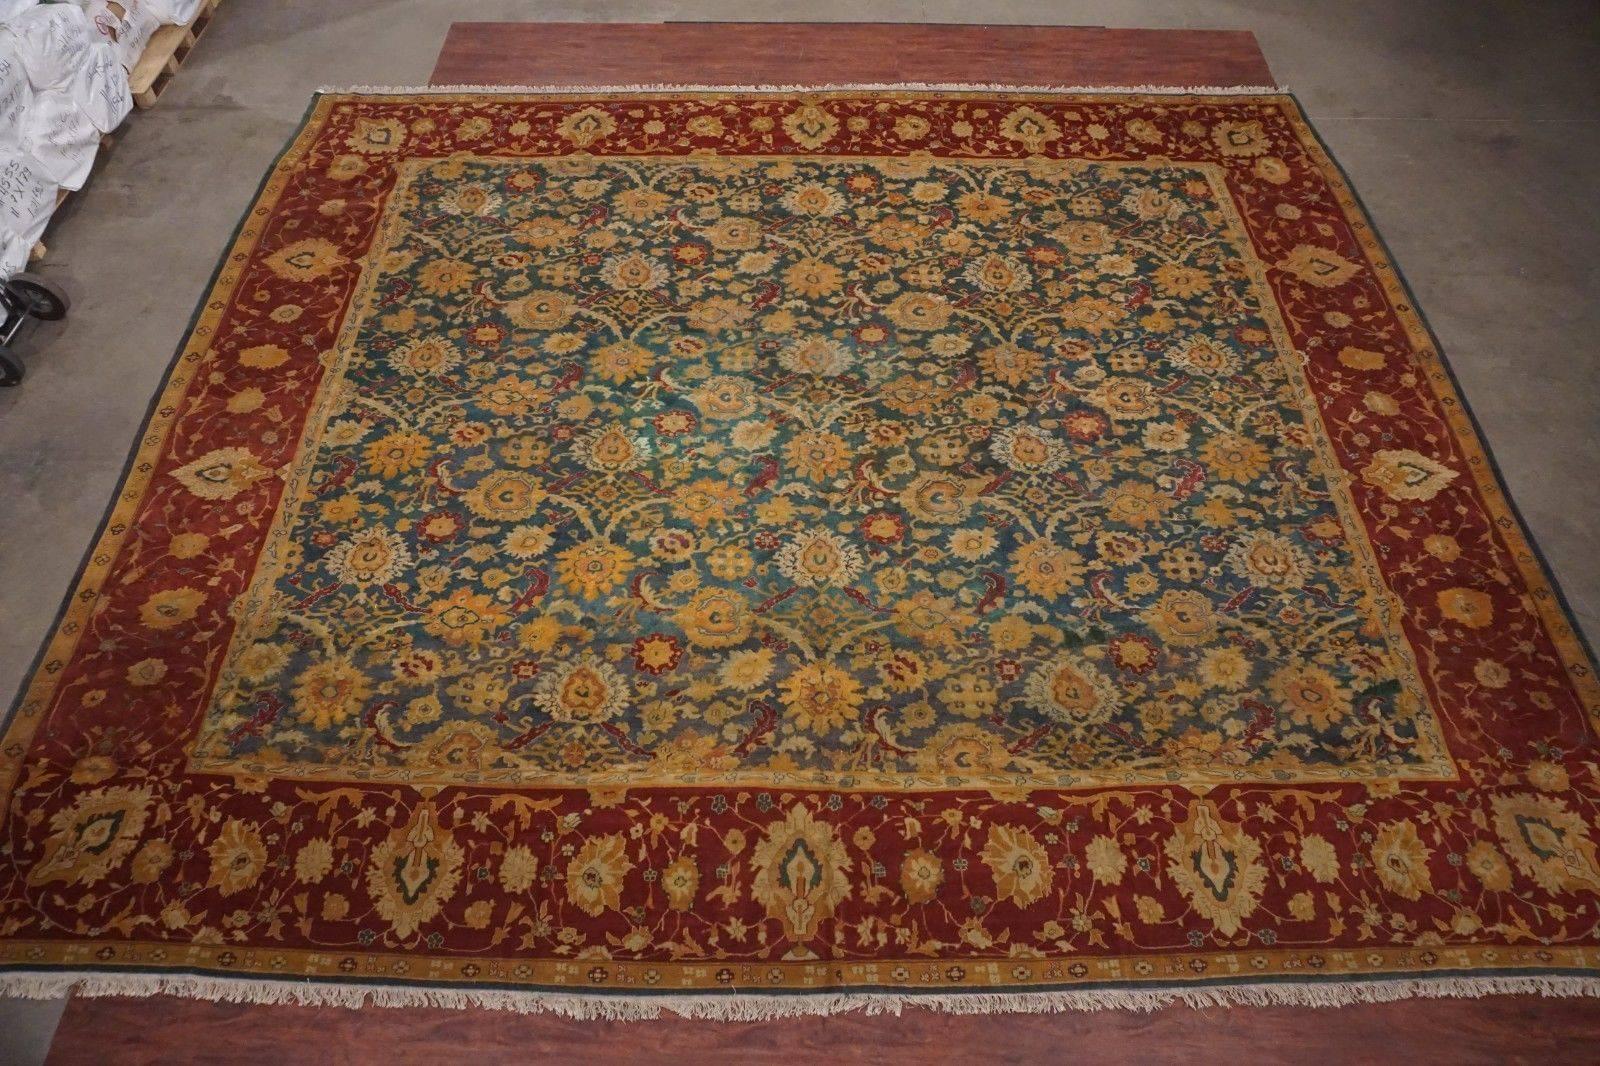 Antique Indian Agra rug

circa 1890

Measure: 16' 5